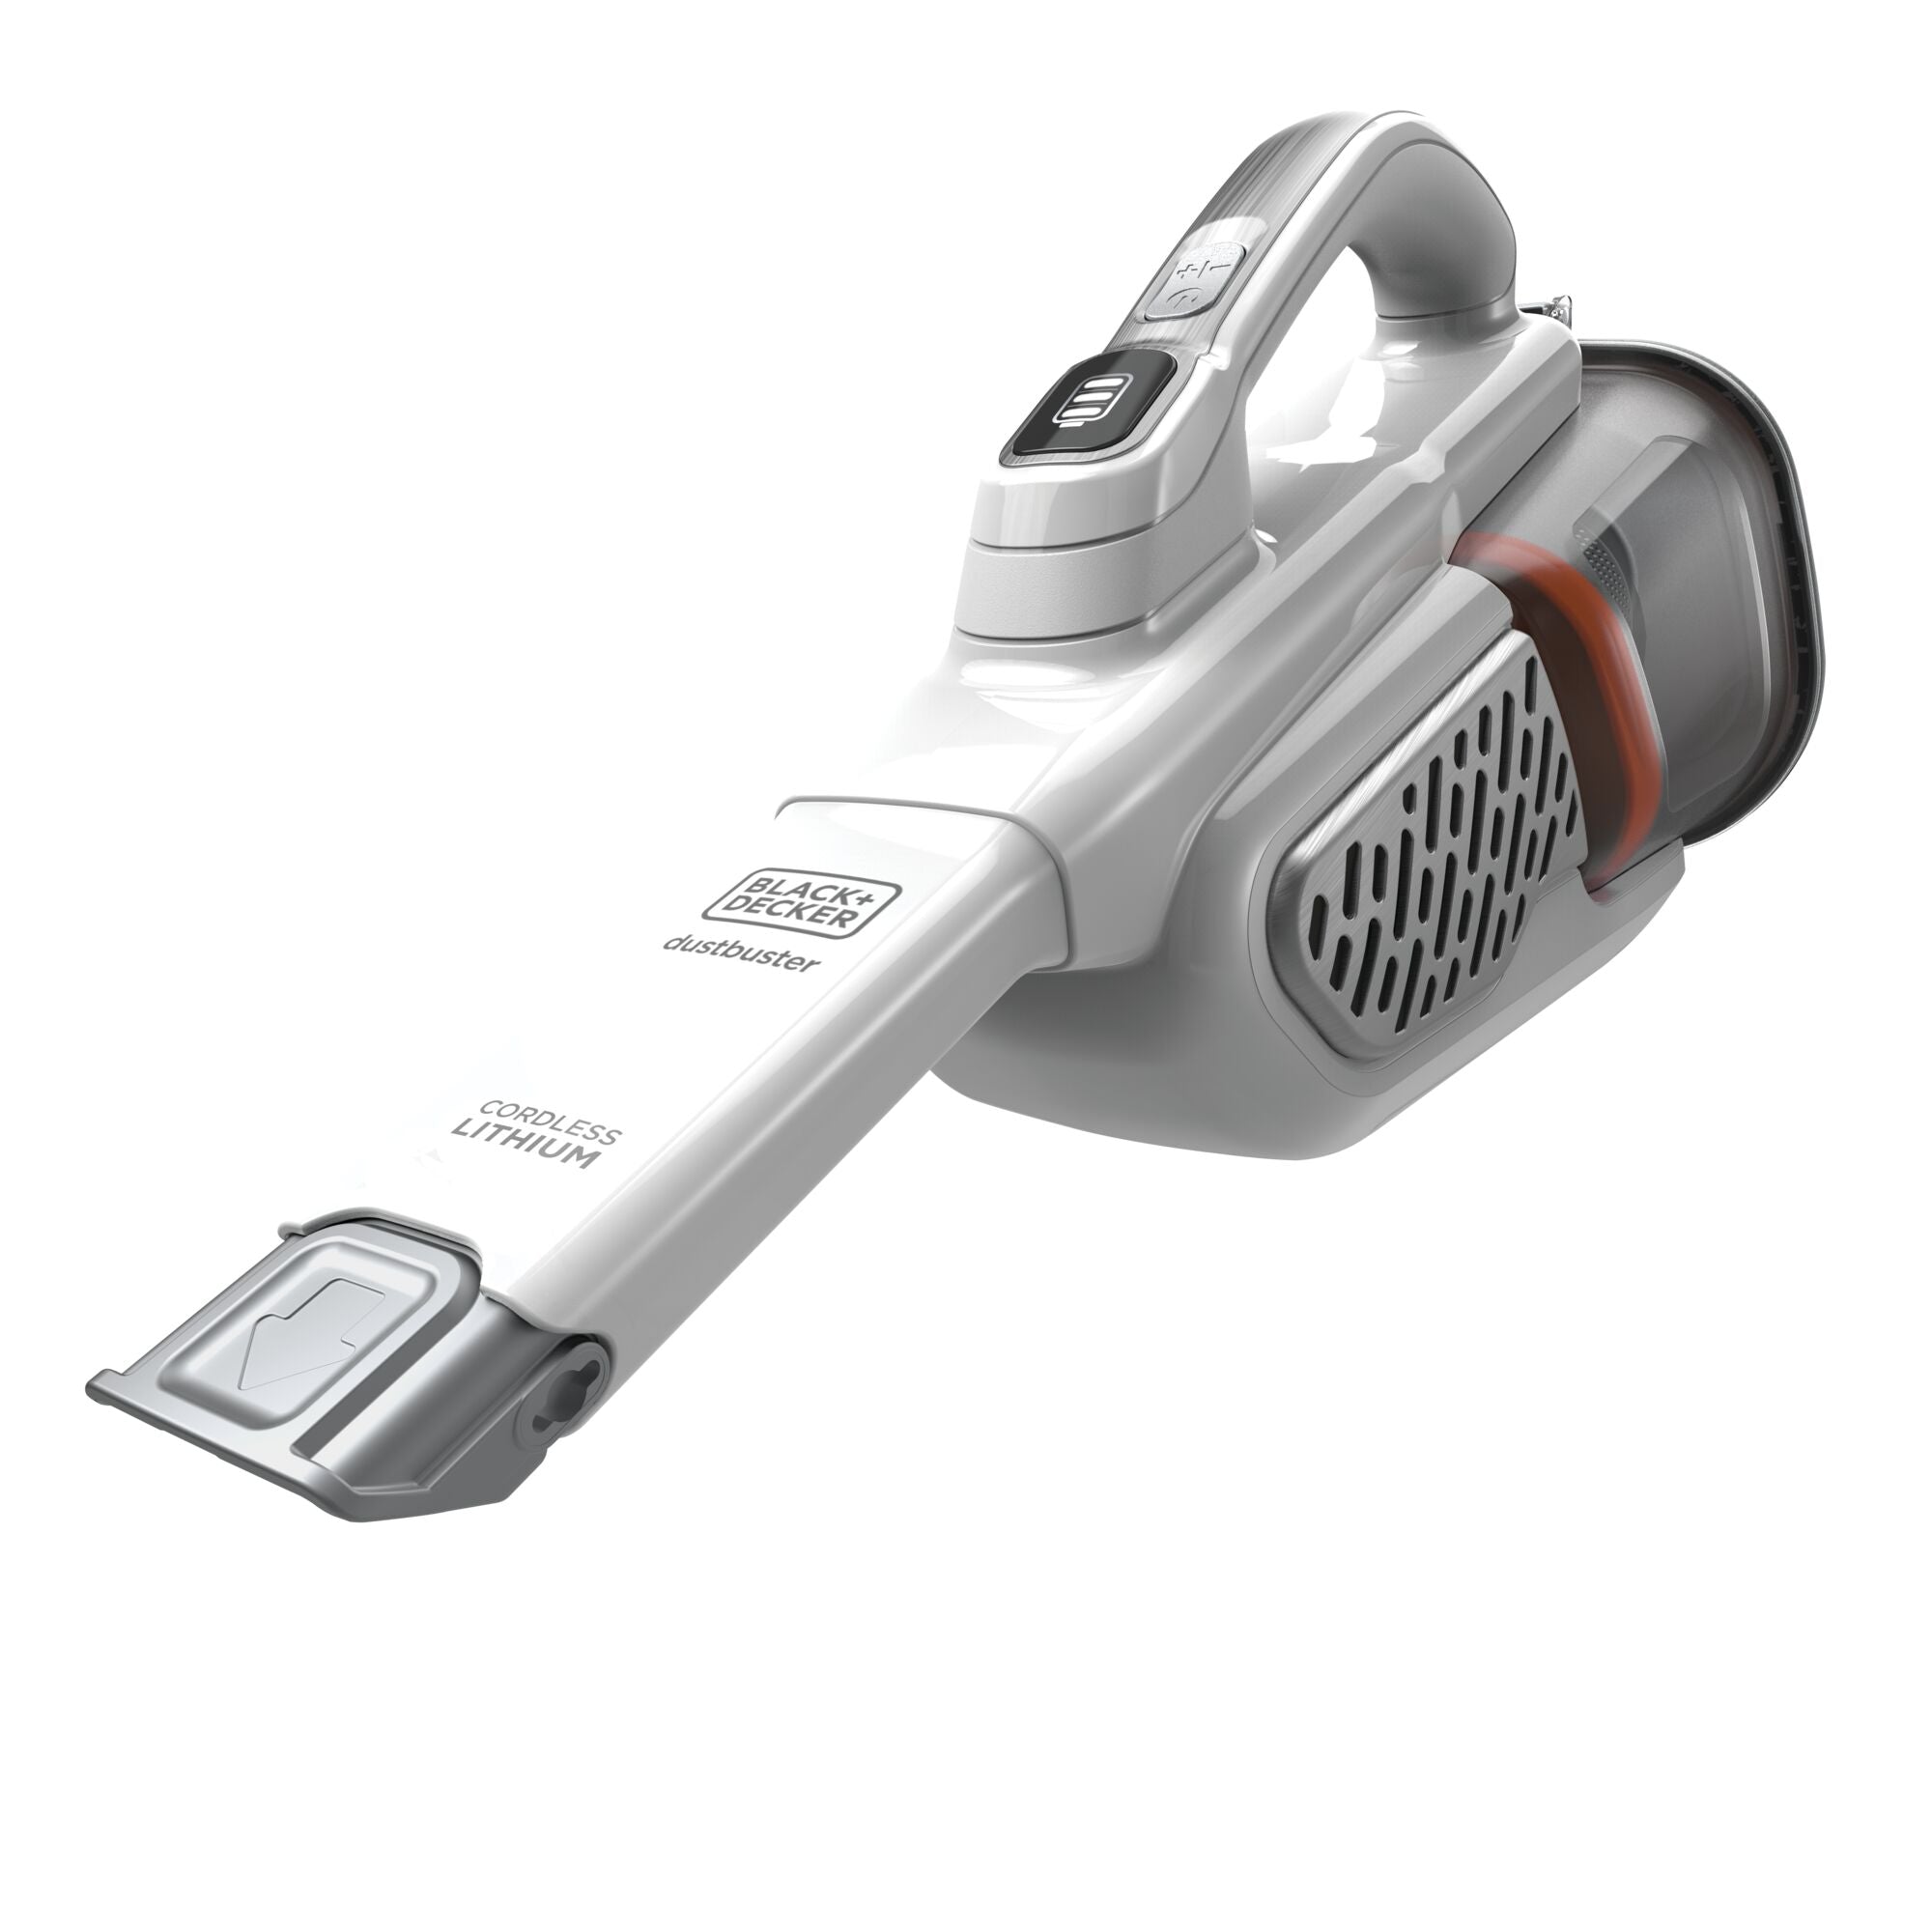 Dustbuster Handheld Vacuum, Cordless, Advancedclean+, White